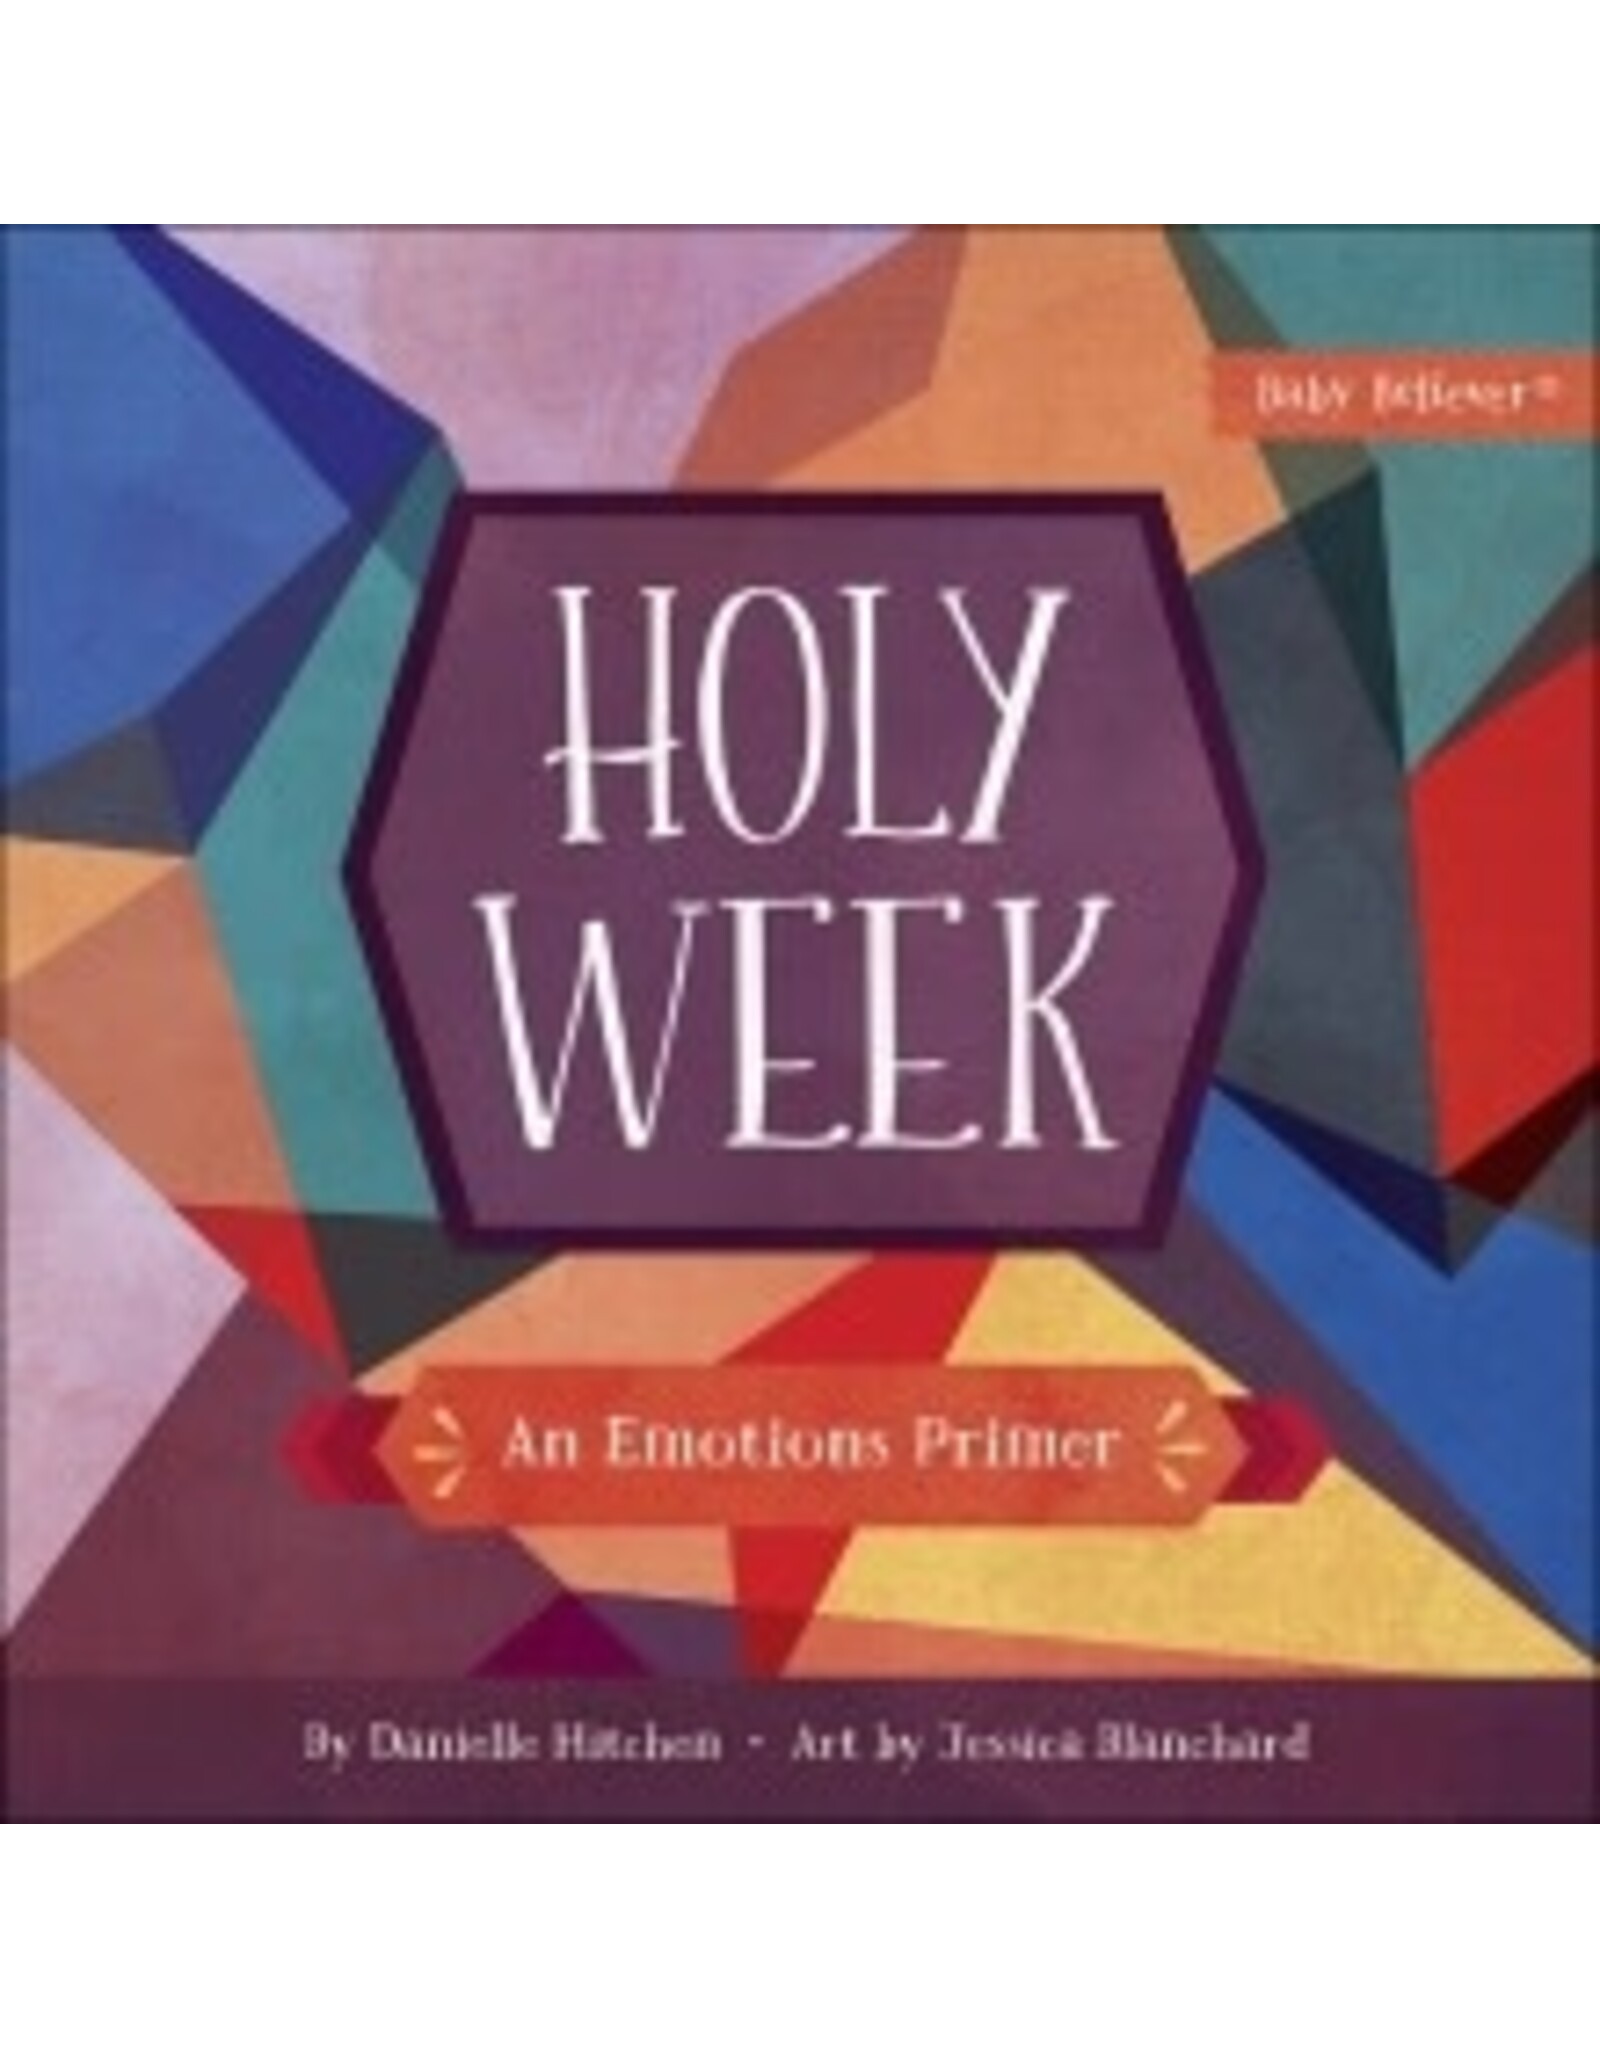 Danielle Hitchen Holy Week